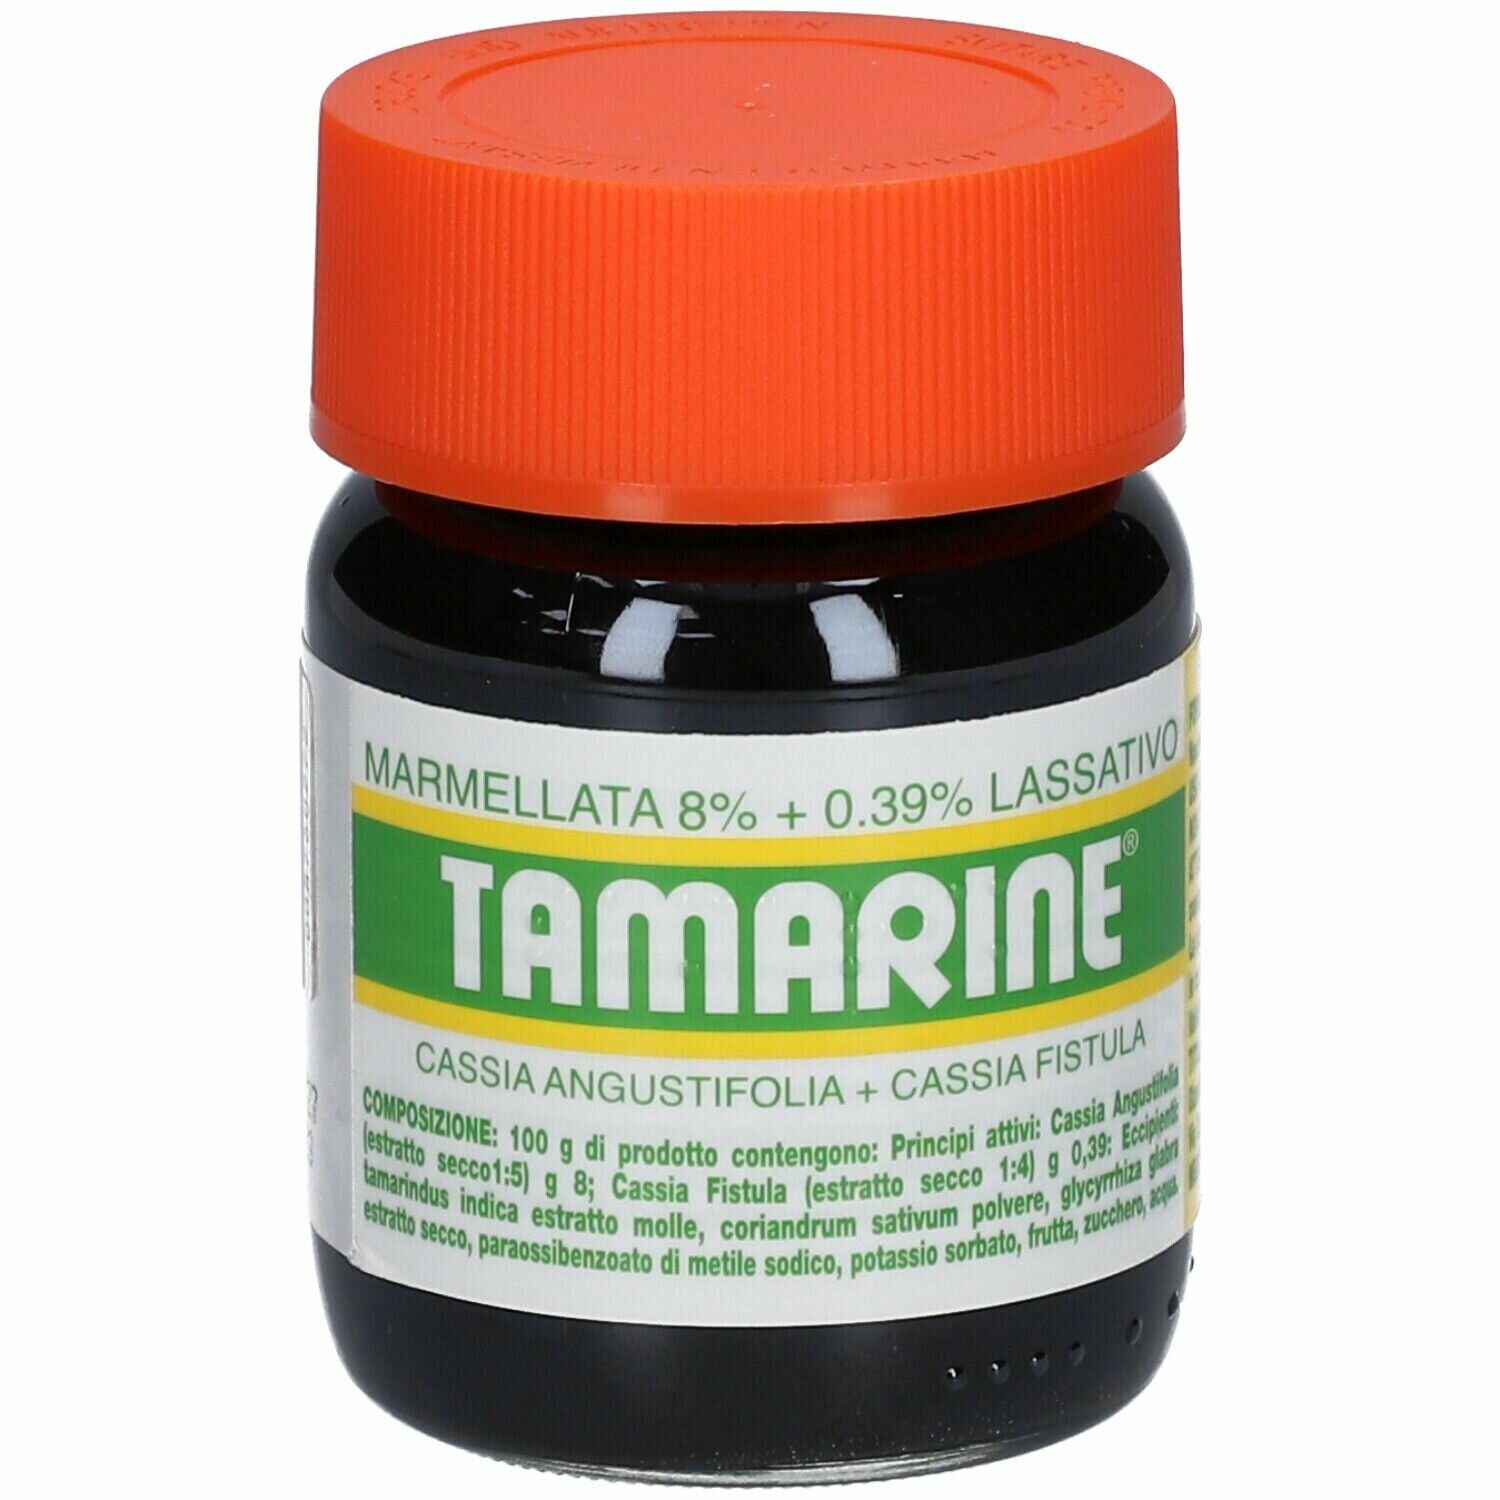 GLAXOSMITHKLINE C.HEALTH.SRL Tamarine Marmellata Lassativa 260 G 8% + 0,39%